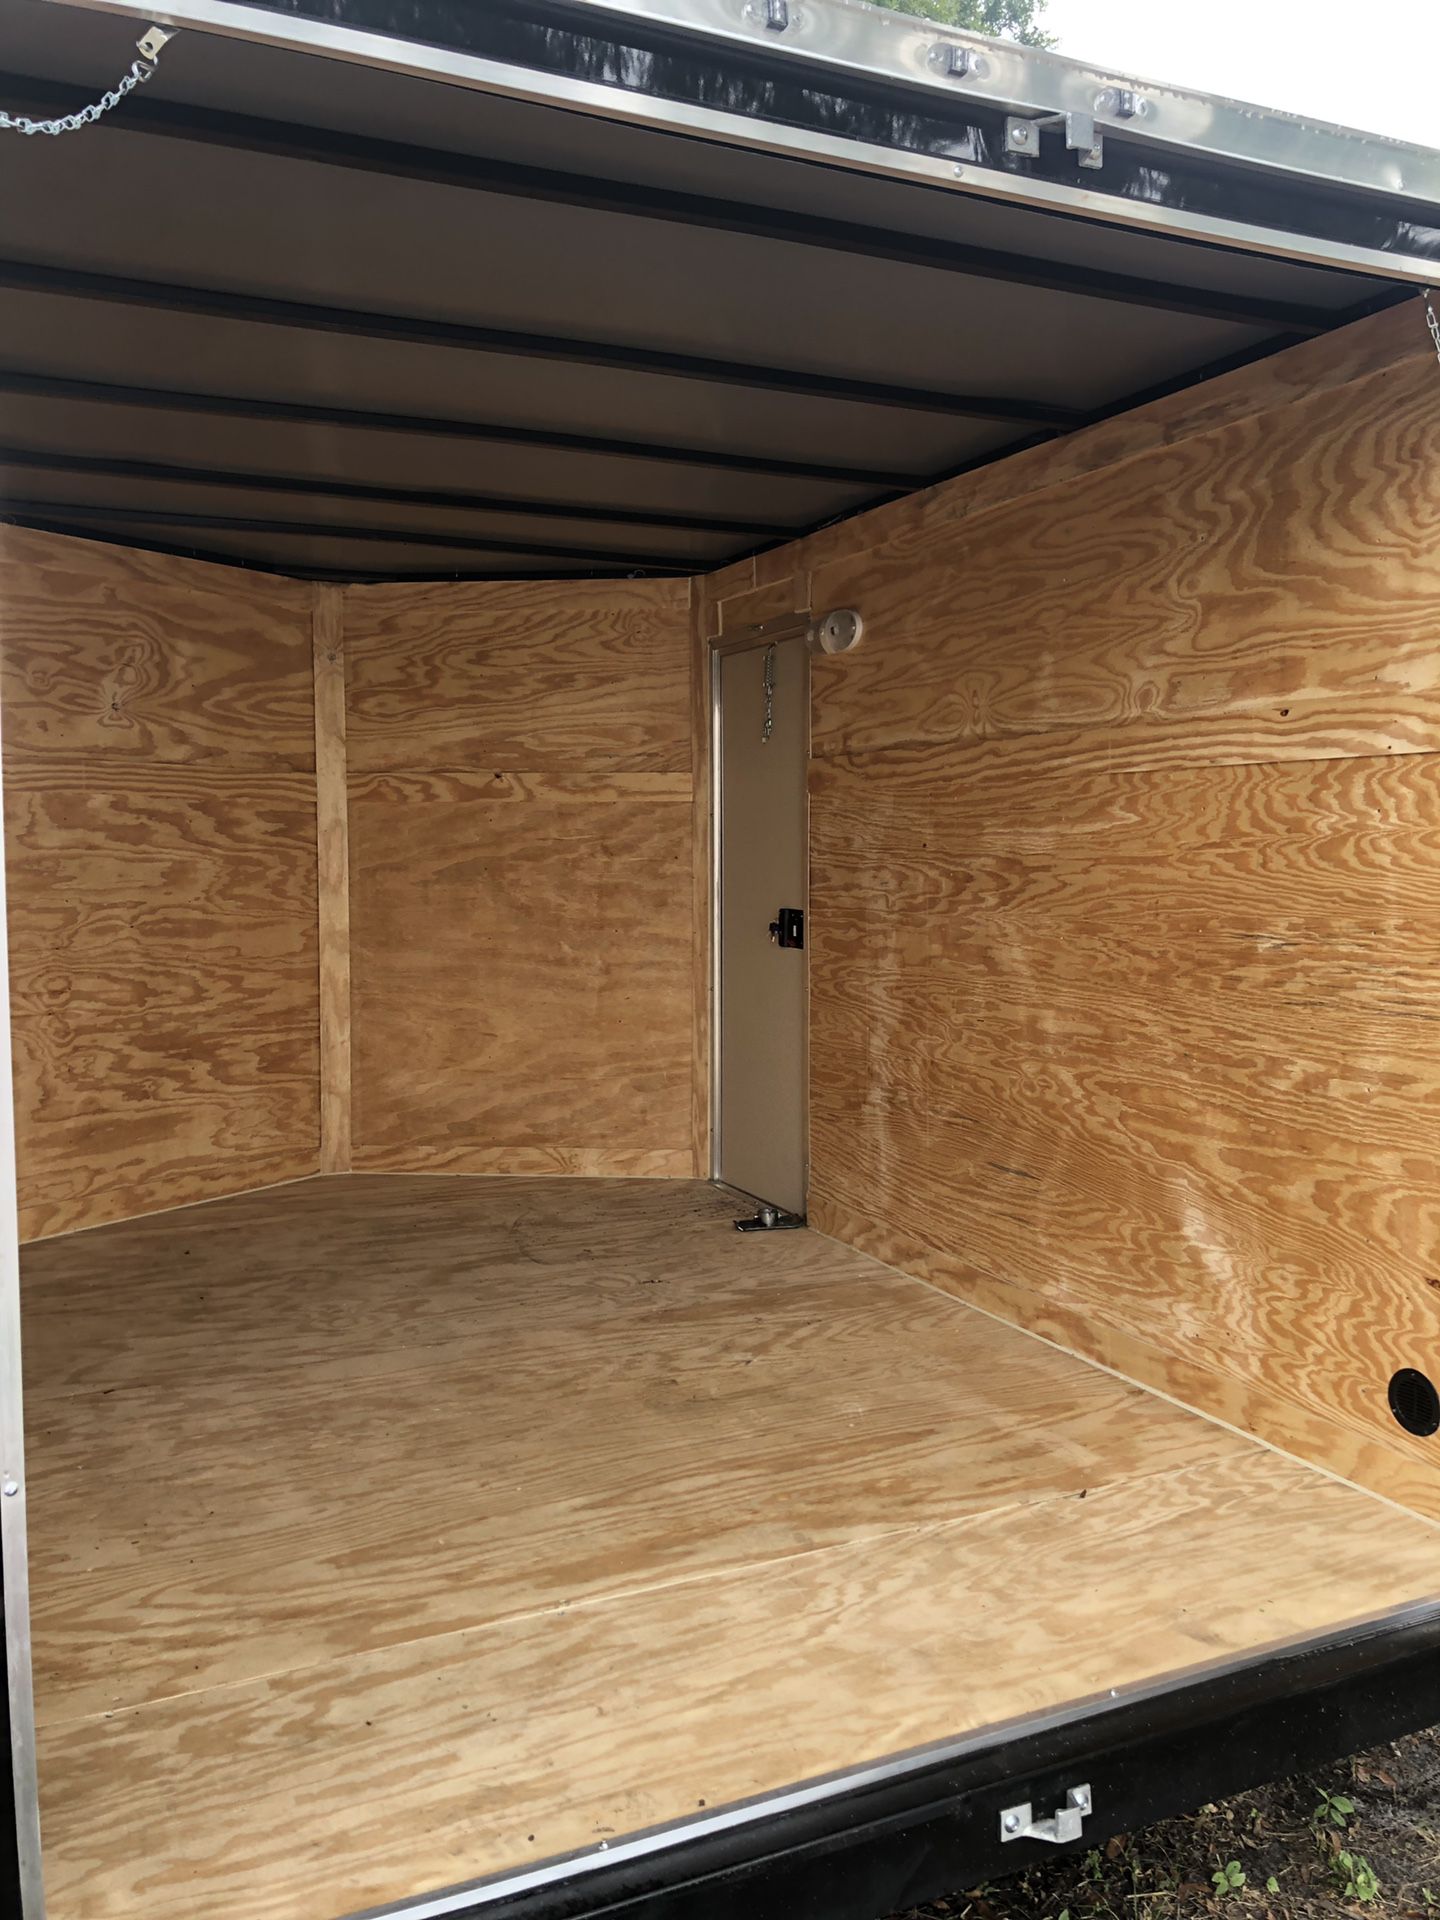 Enclosed trailer 7x10TA Diamond cargo @ Brothers trailers